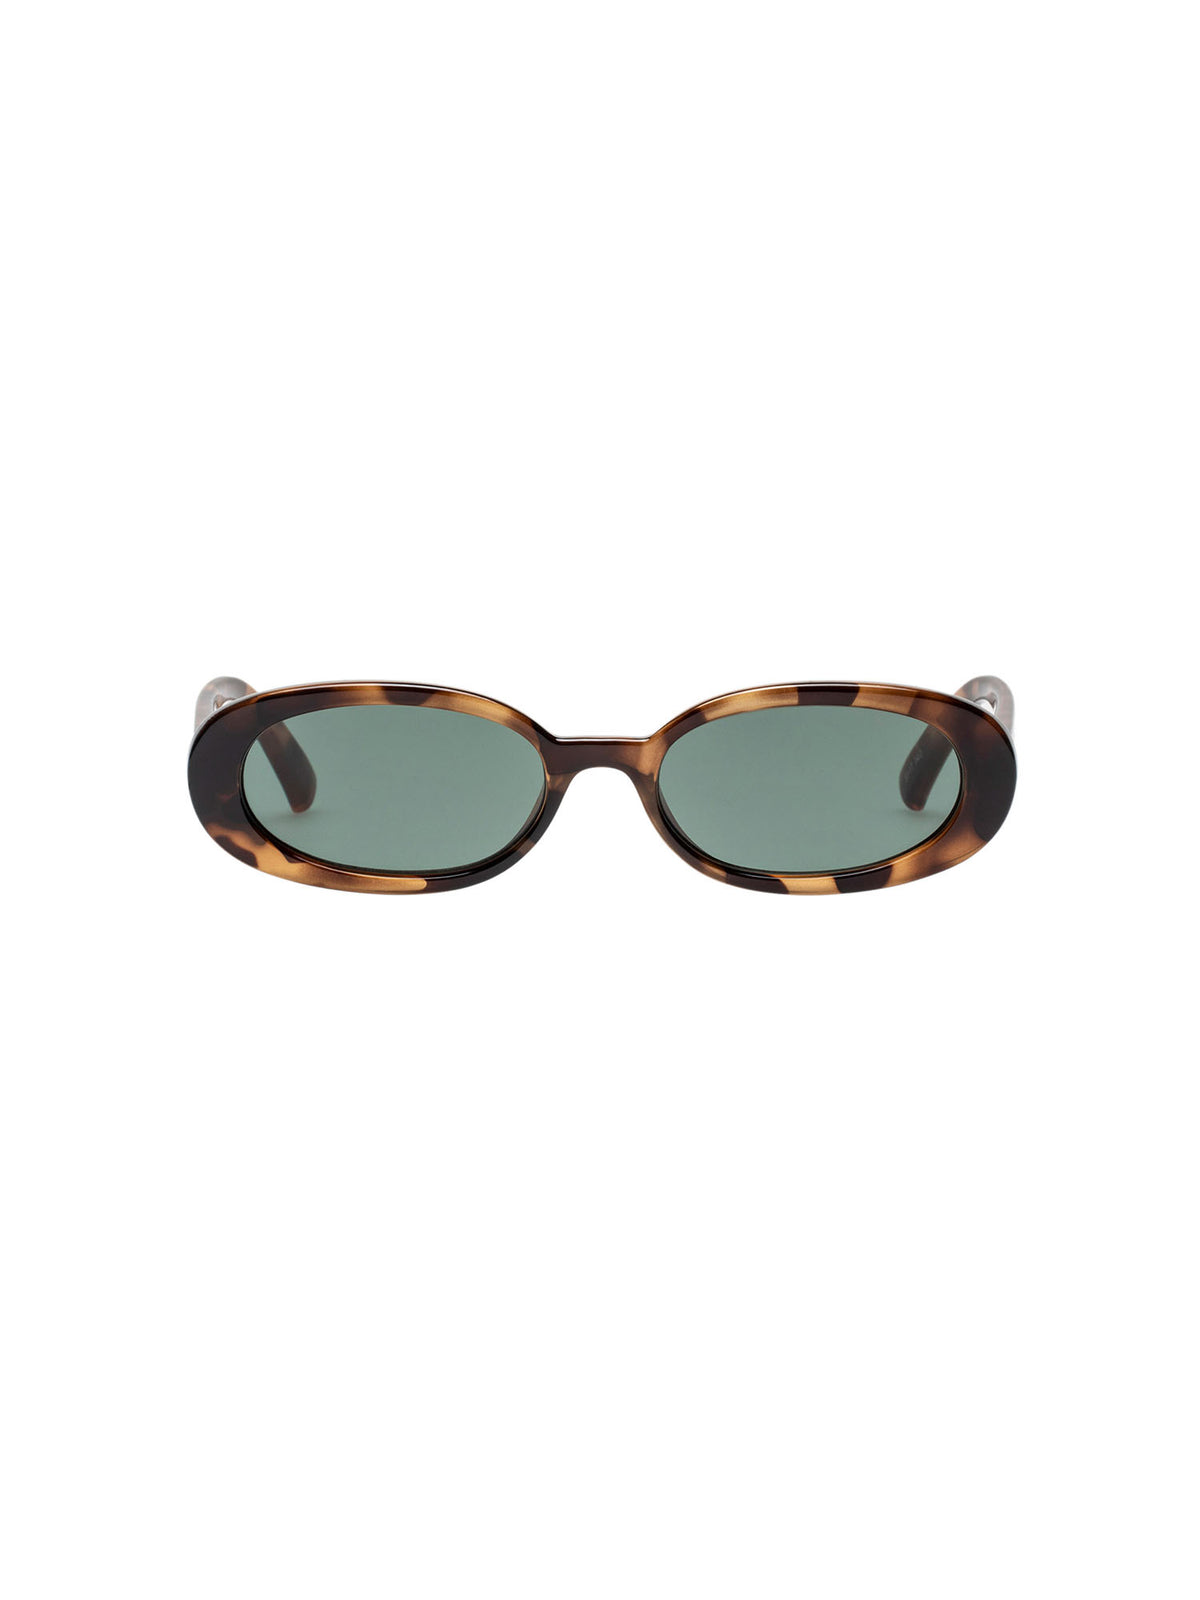 le specs outta love sunglasses in tortoise shell frames